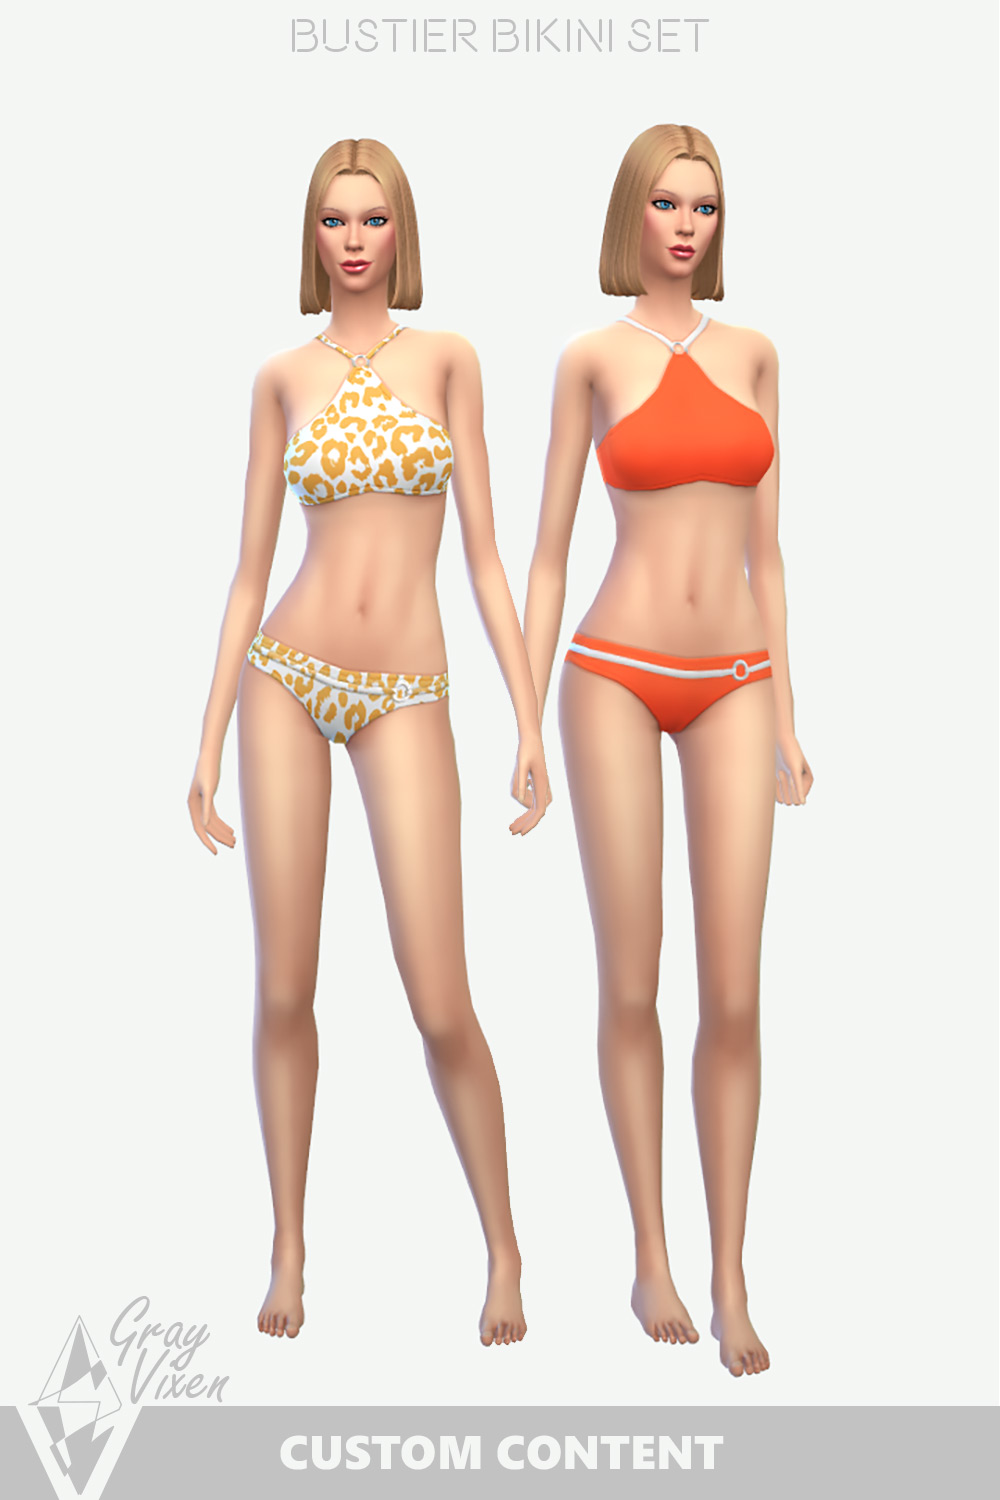 The Sims 4 Bikini CC